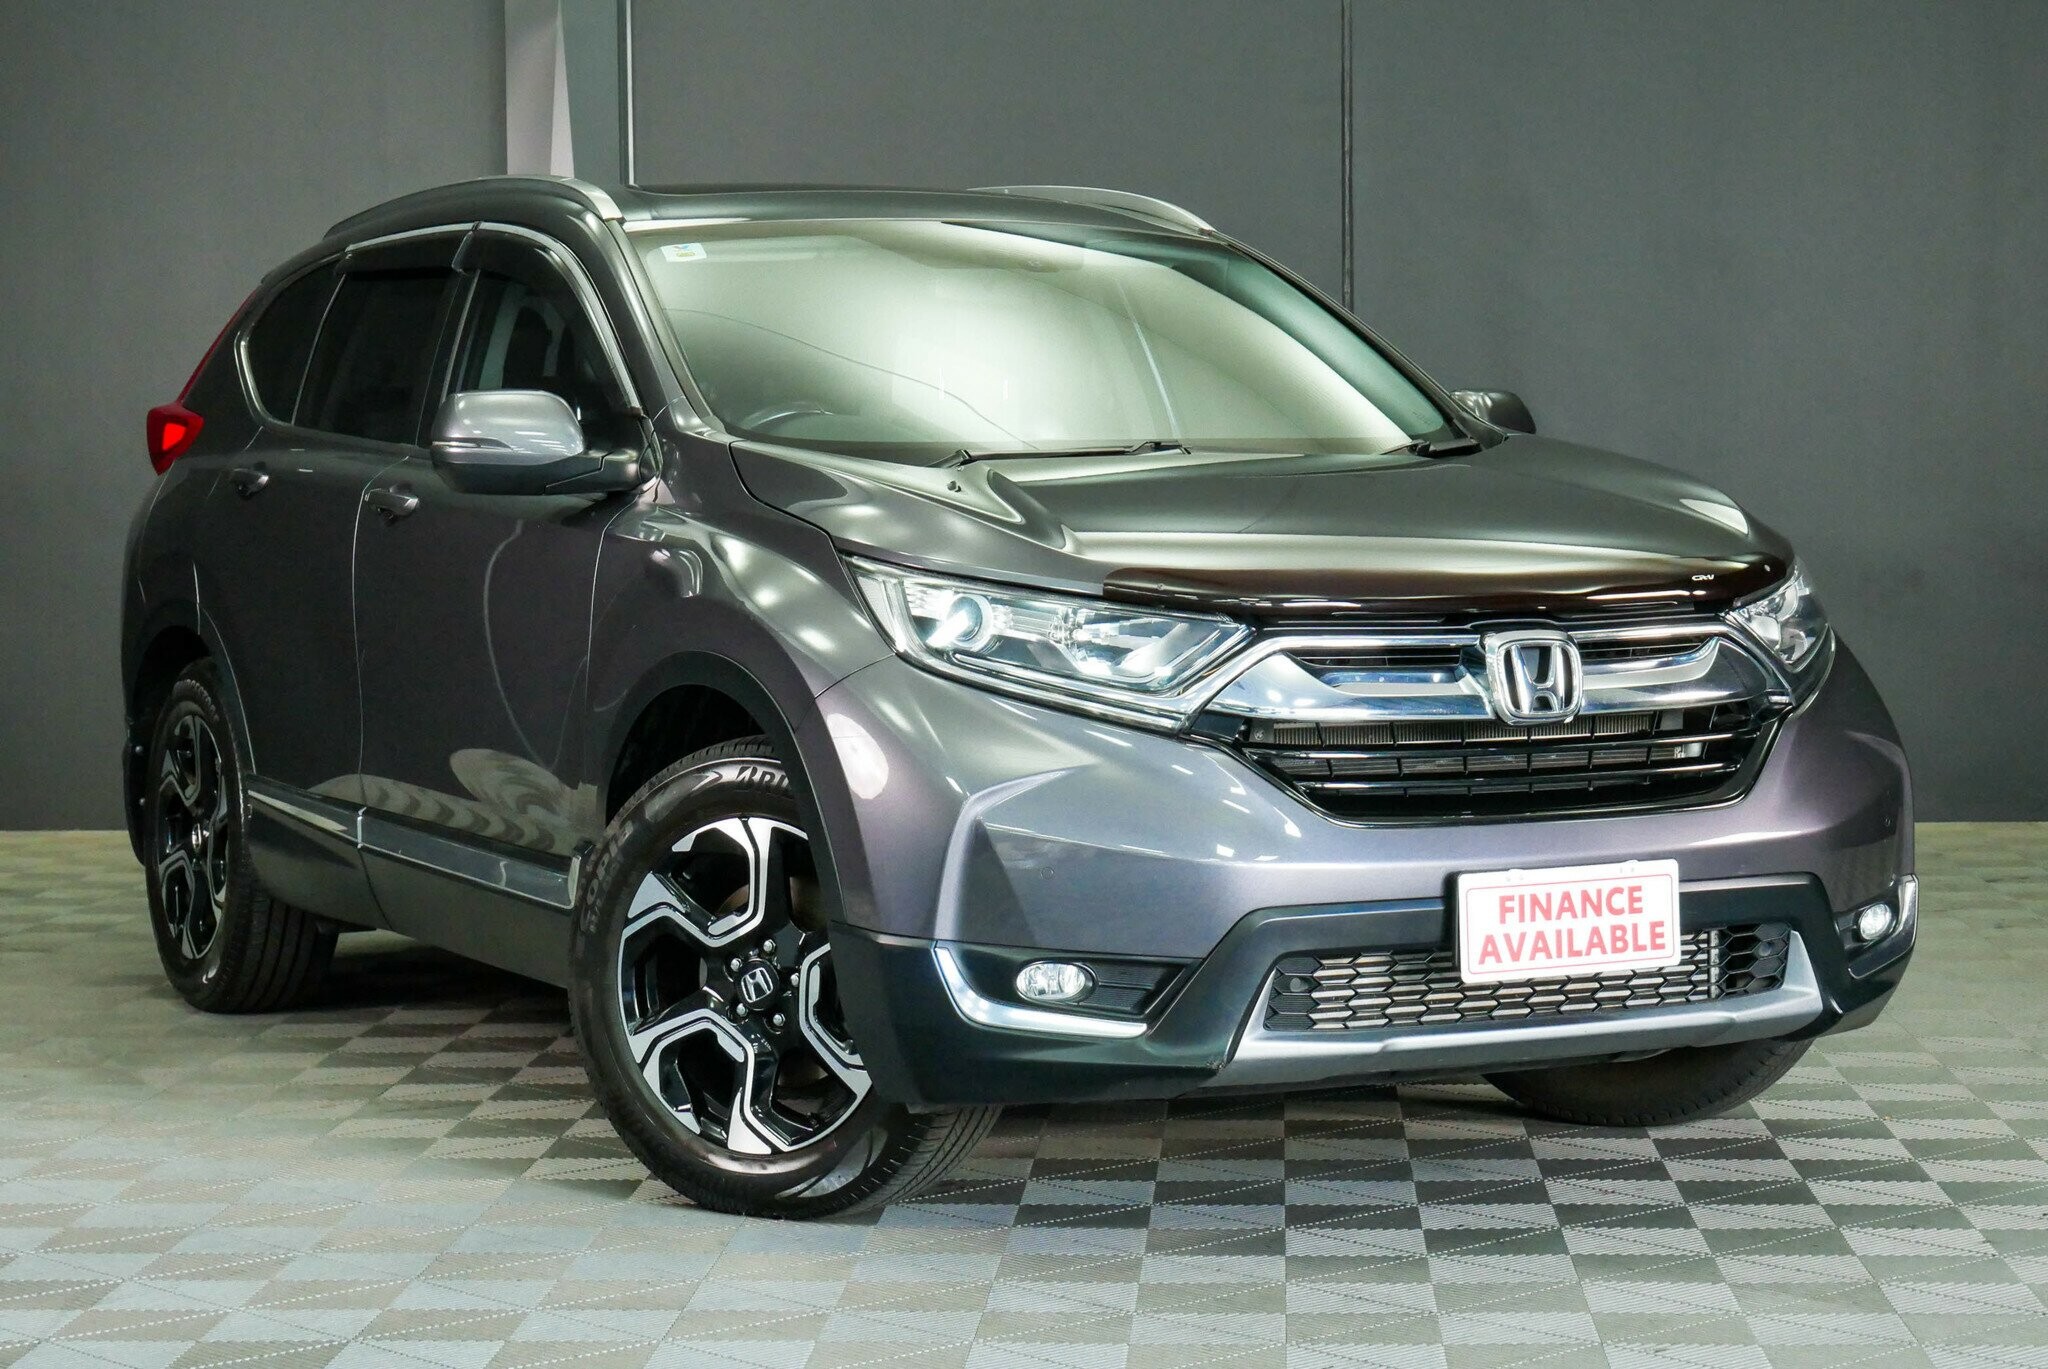 Honda Cr-v image 1